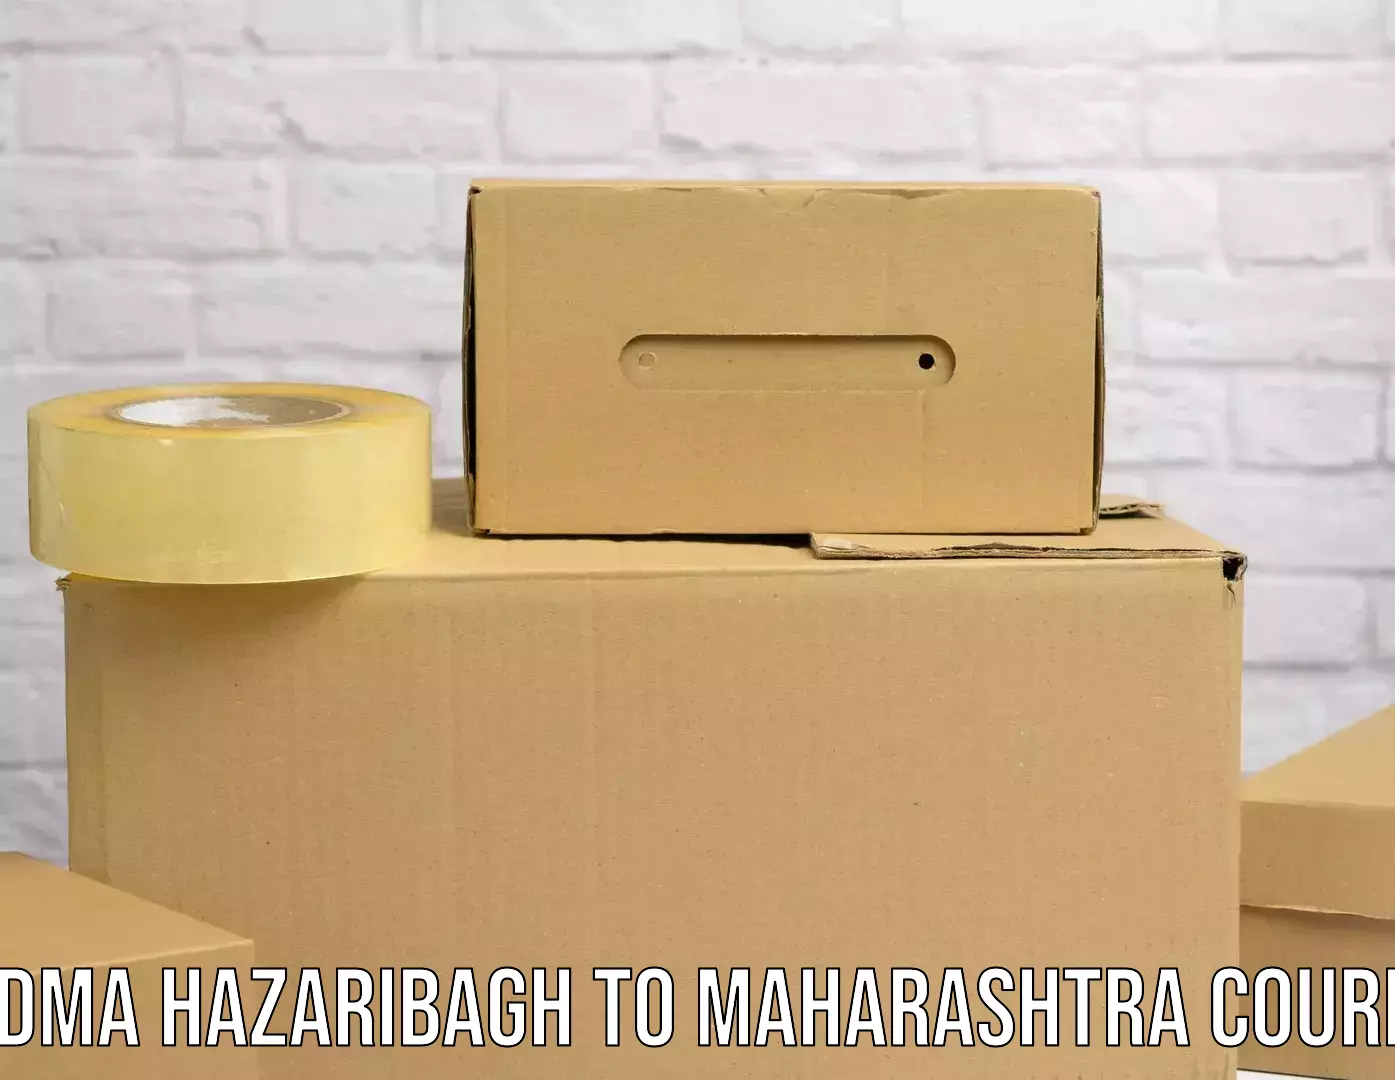 Parcel handling and care Padma Hazaribagh to Maharashtra